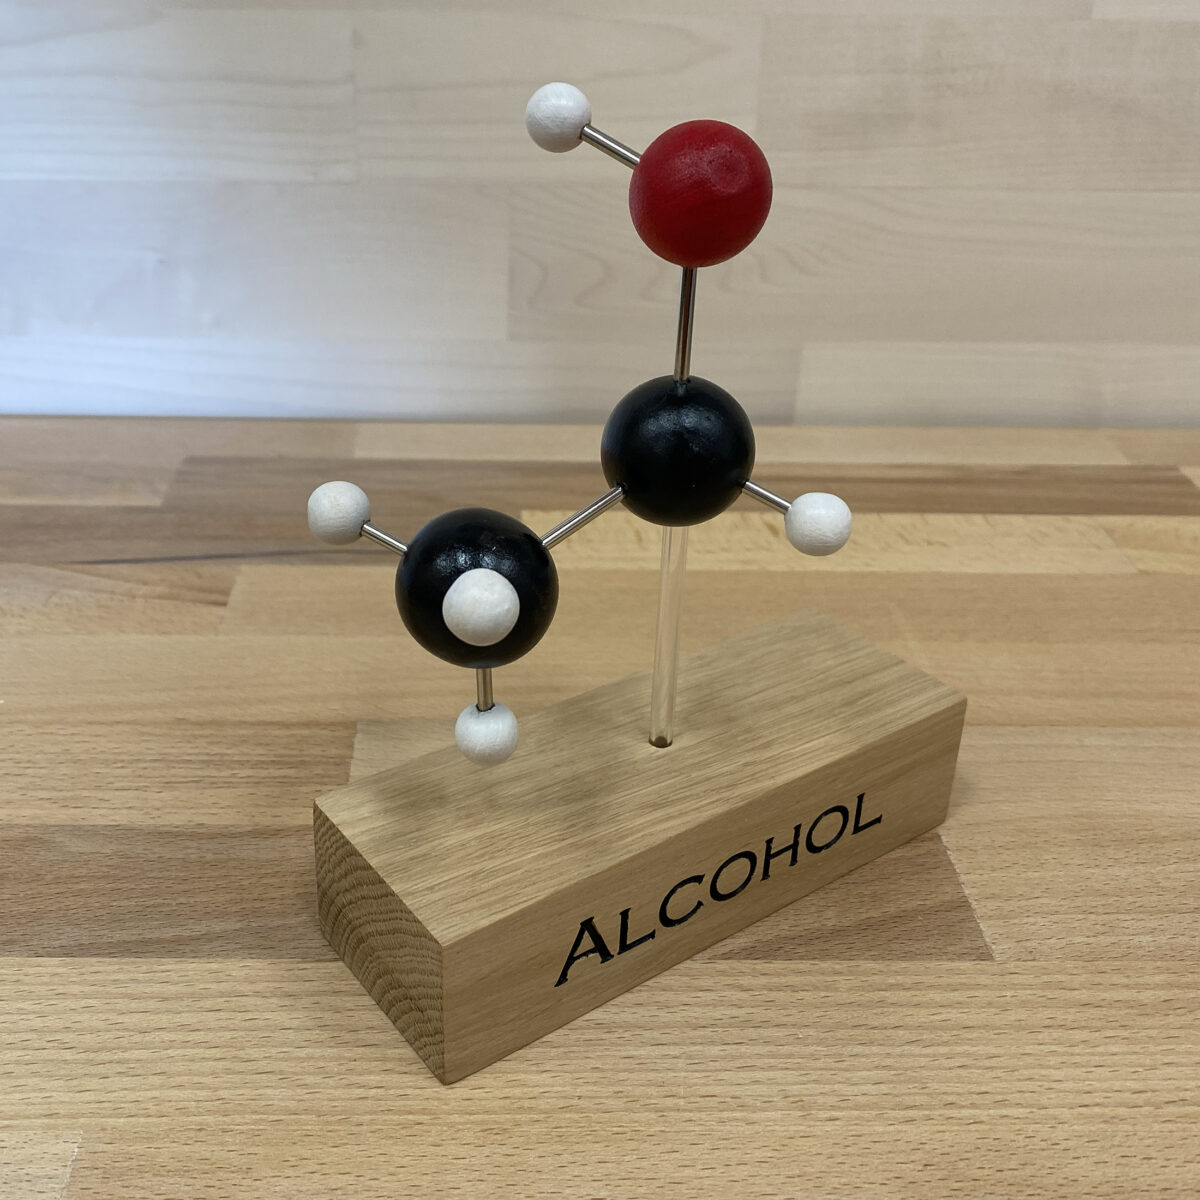 Alcohol molecule model